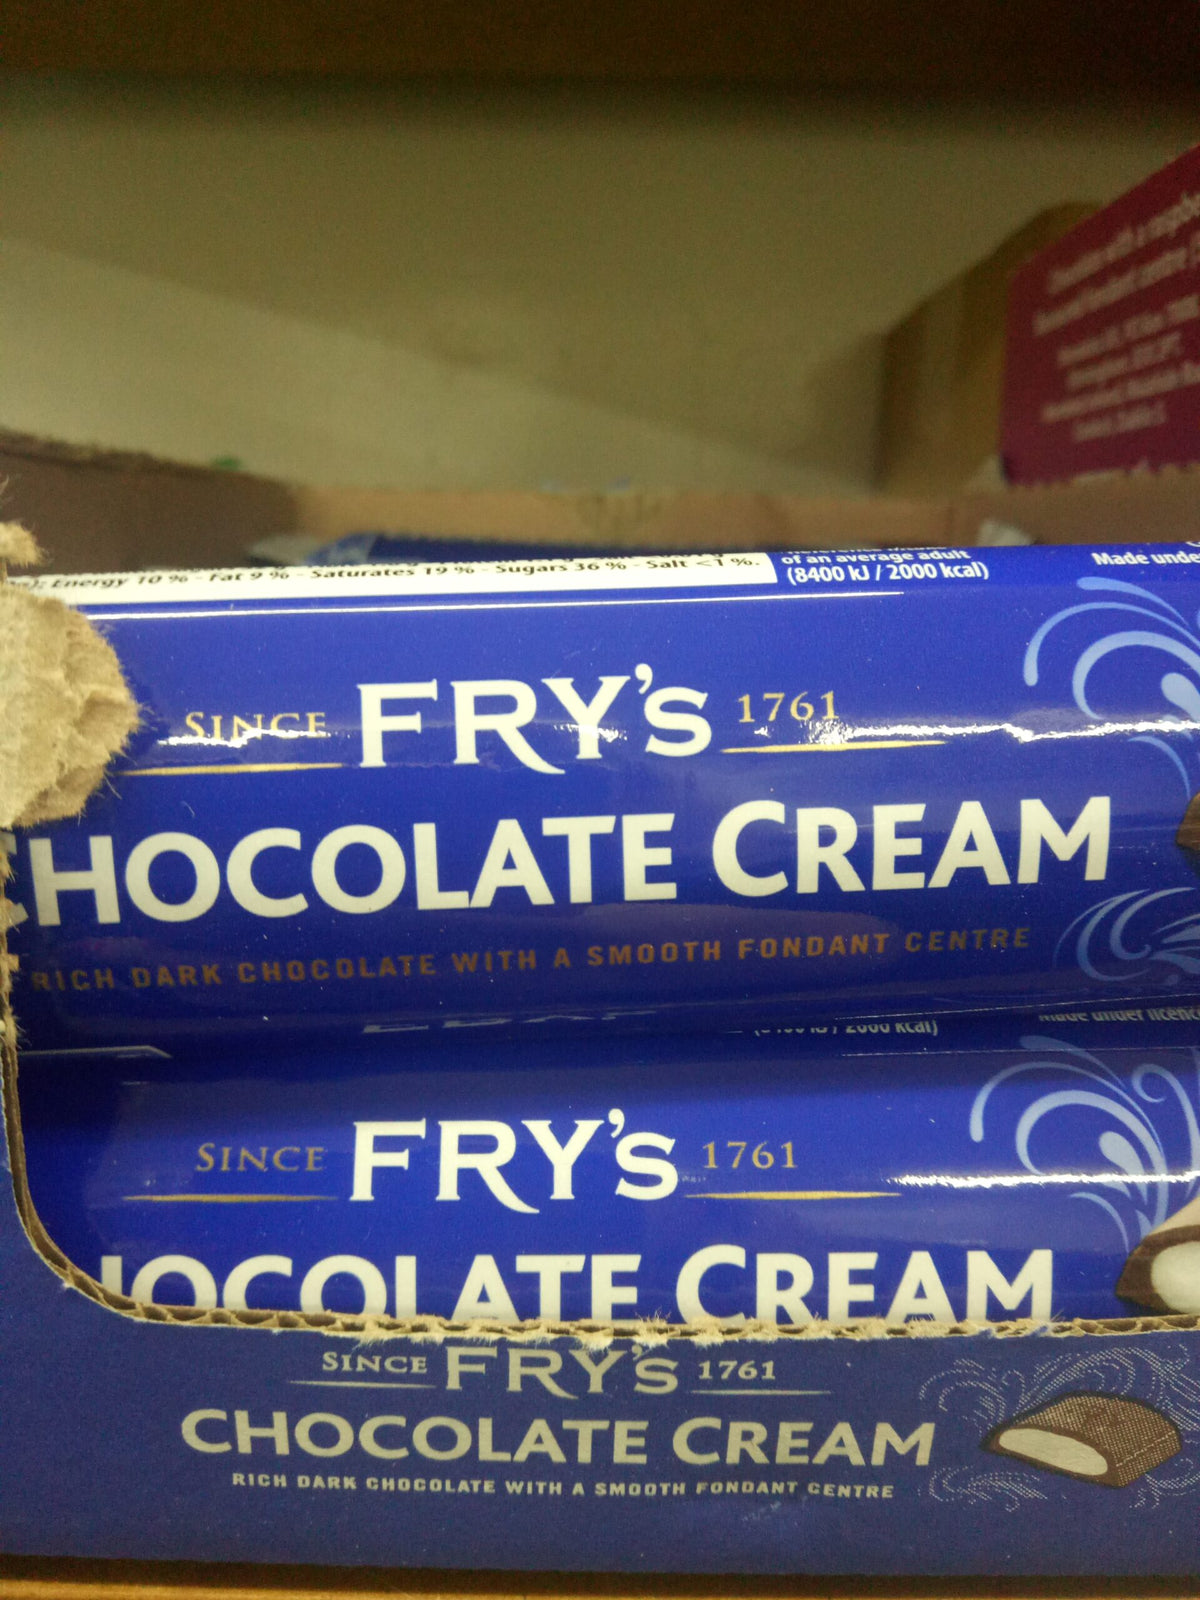 Fry's chocolate cream